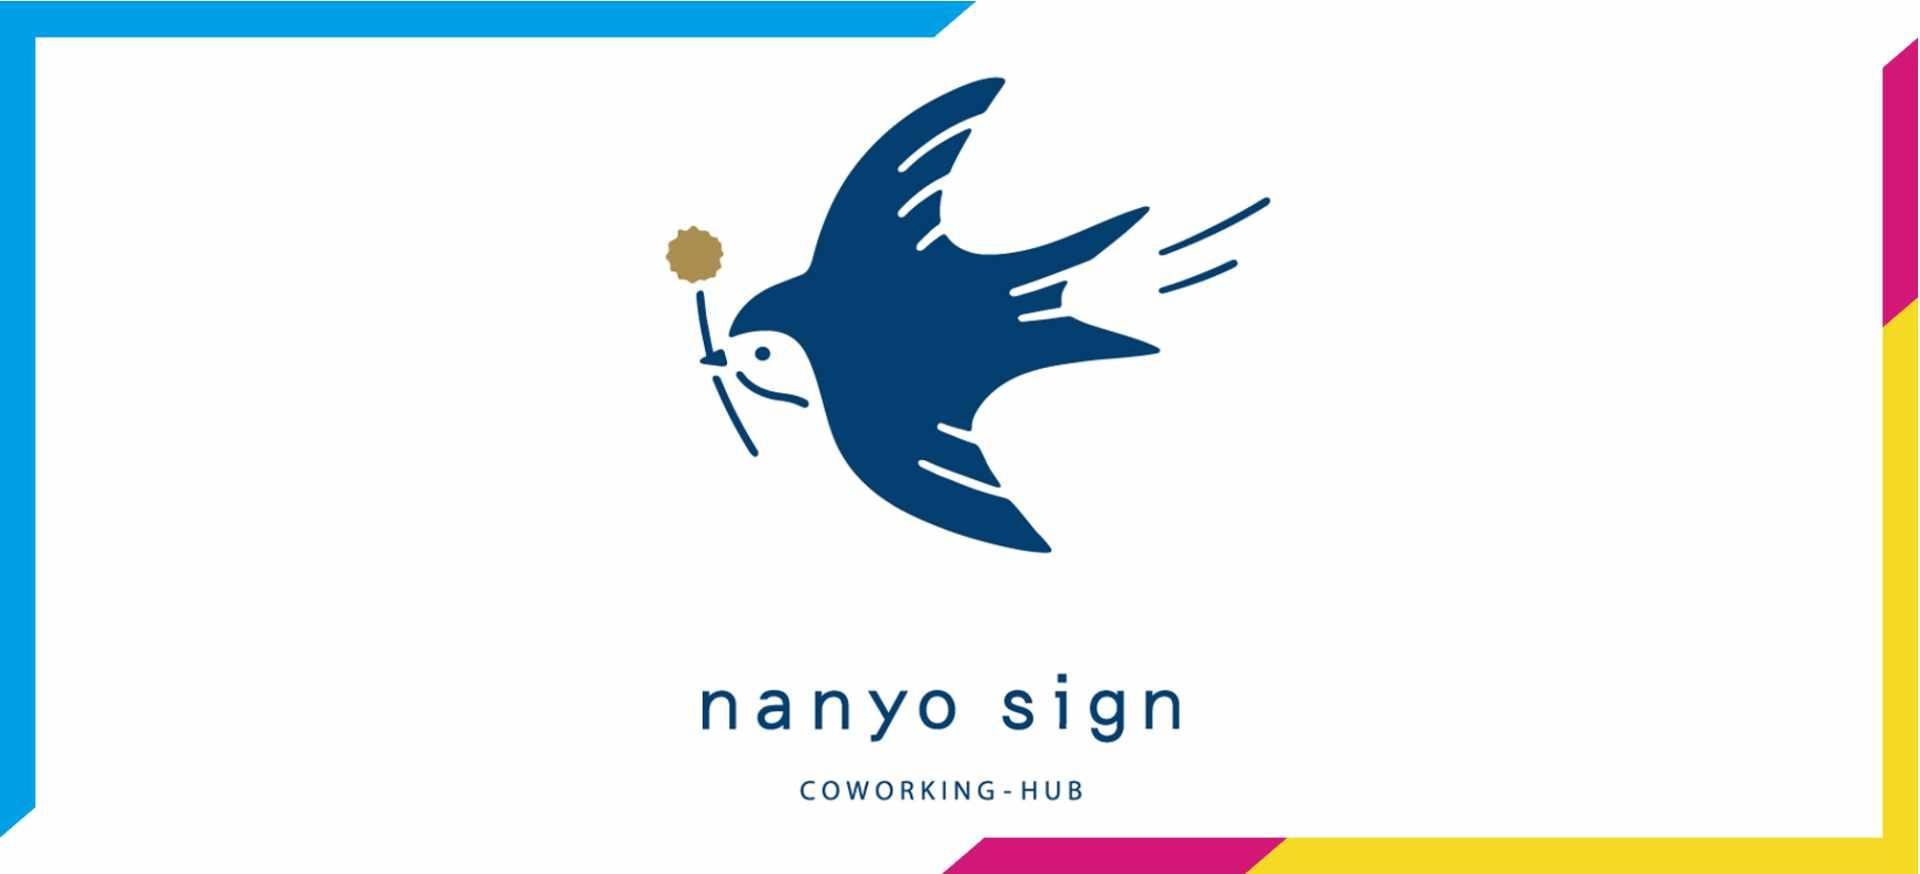 COWORKING-HUB nanyo signのロゴ